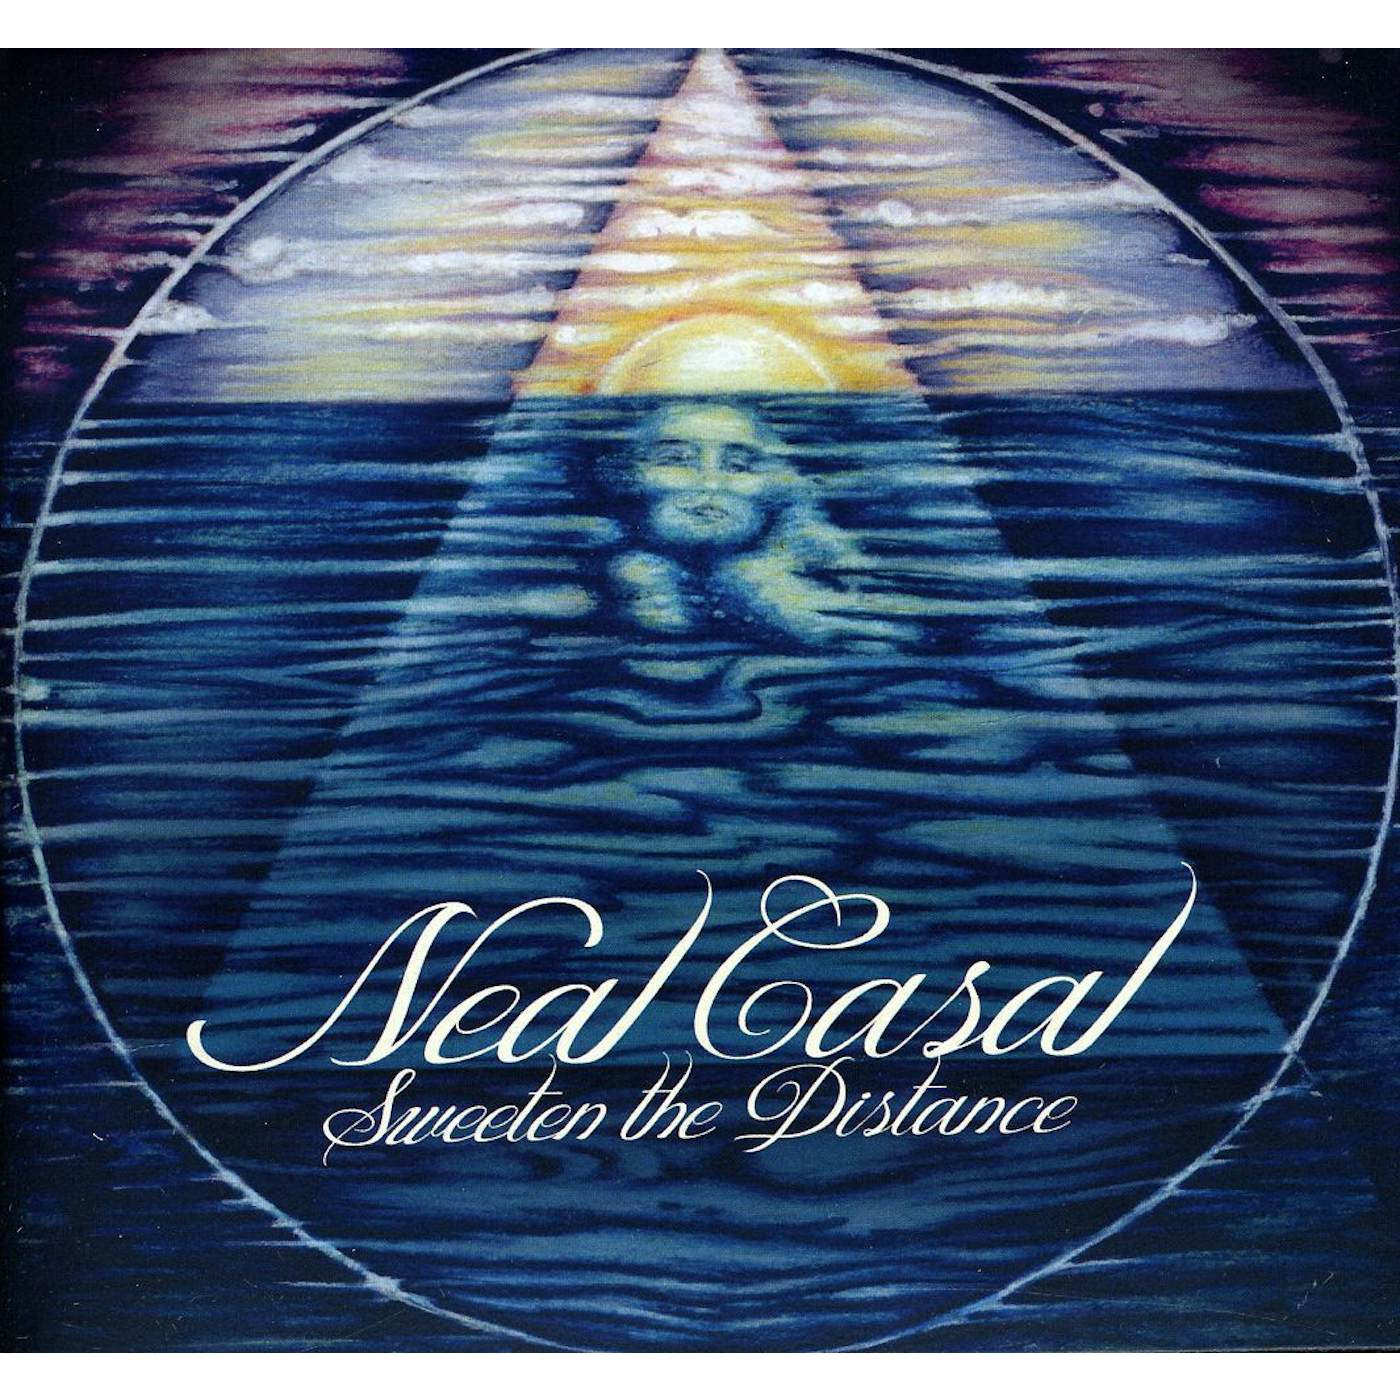 Neal Casal SWEETEN THE DISTANCE CD